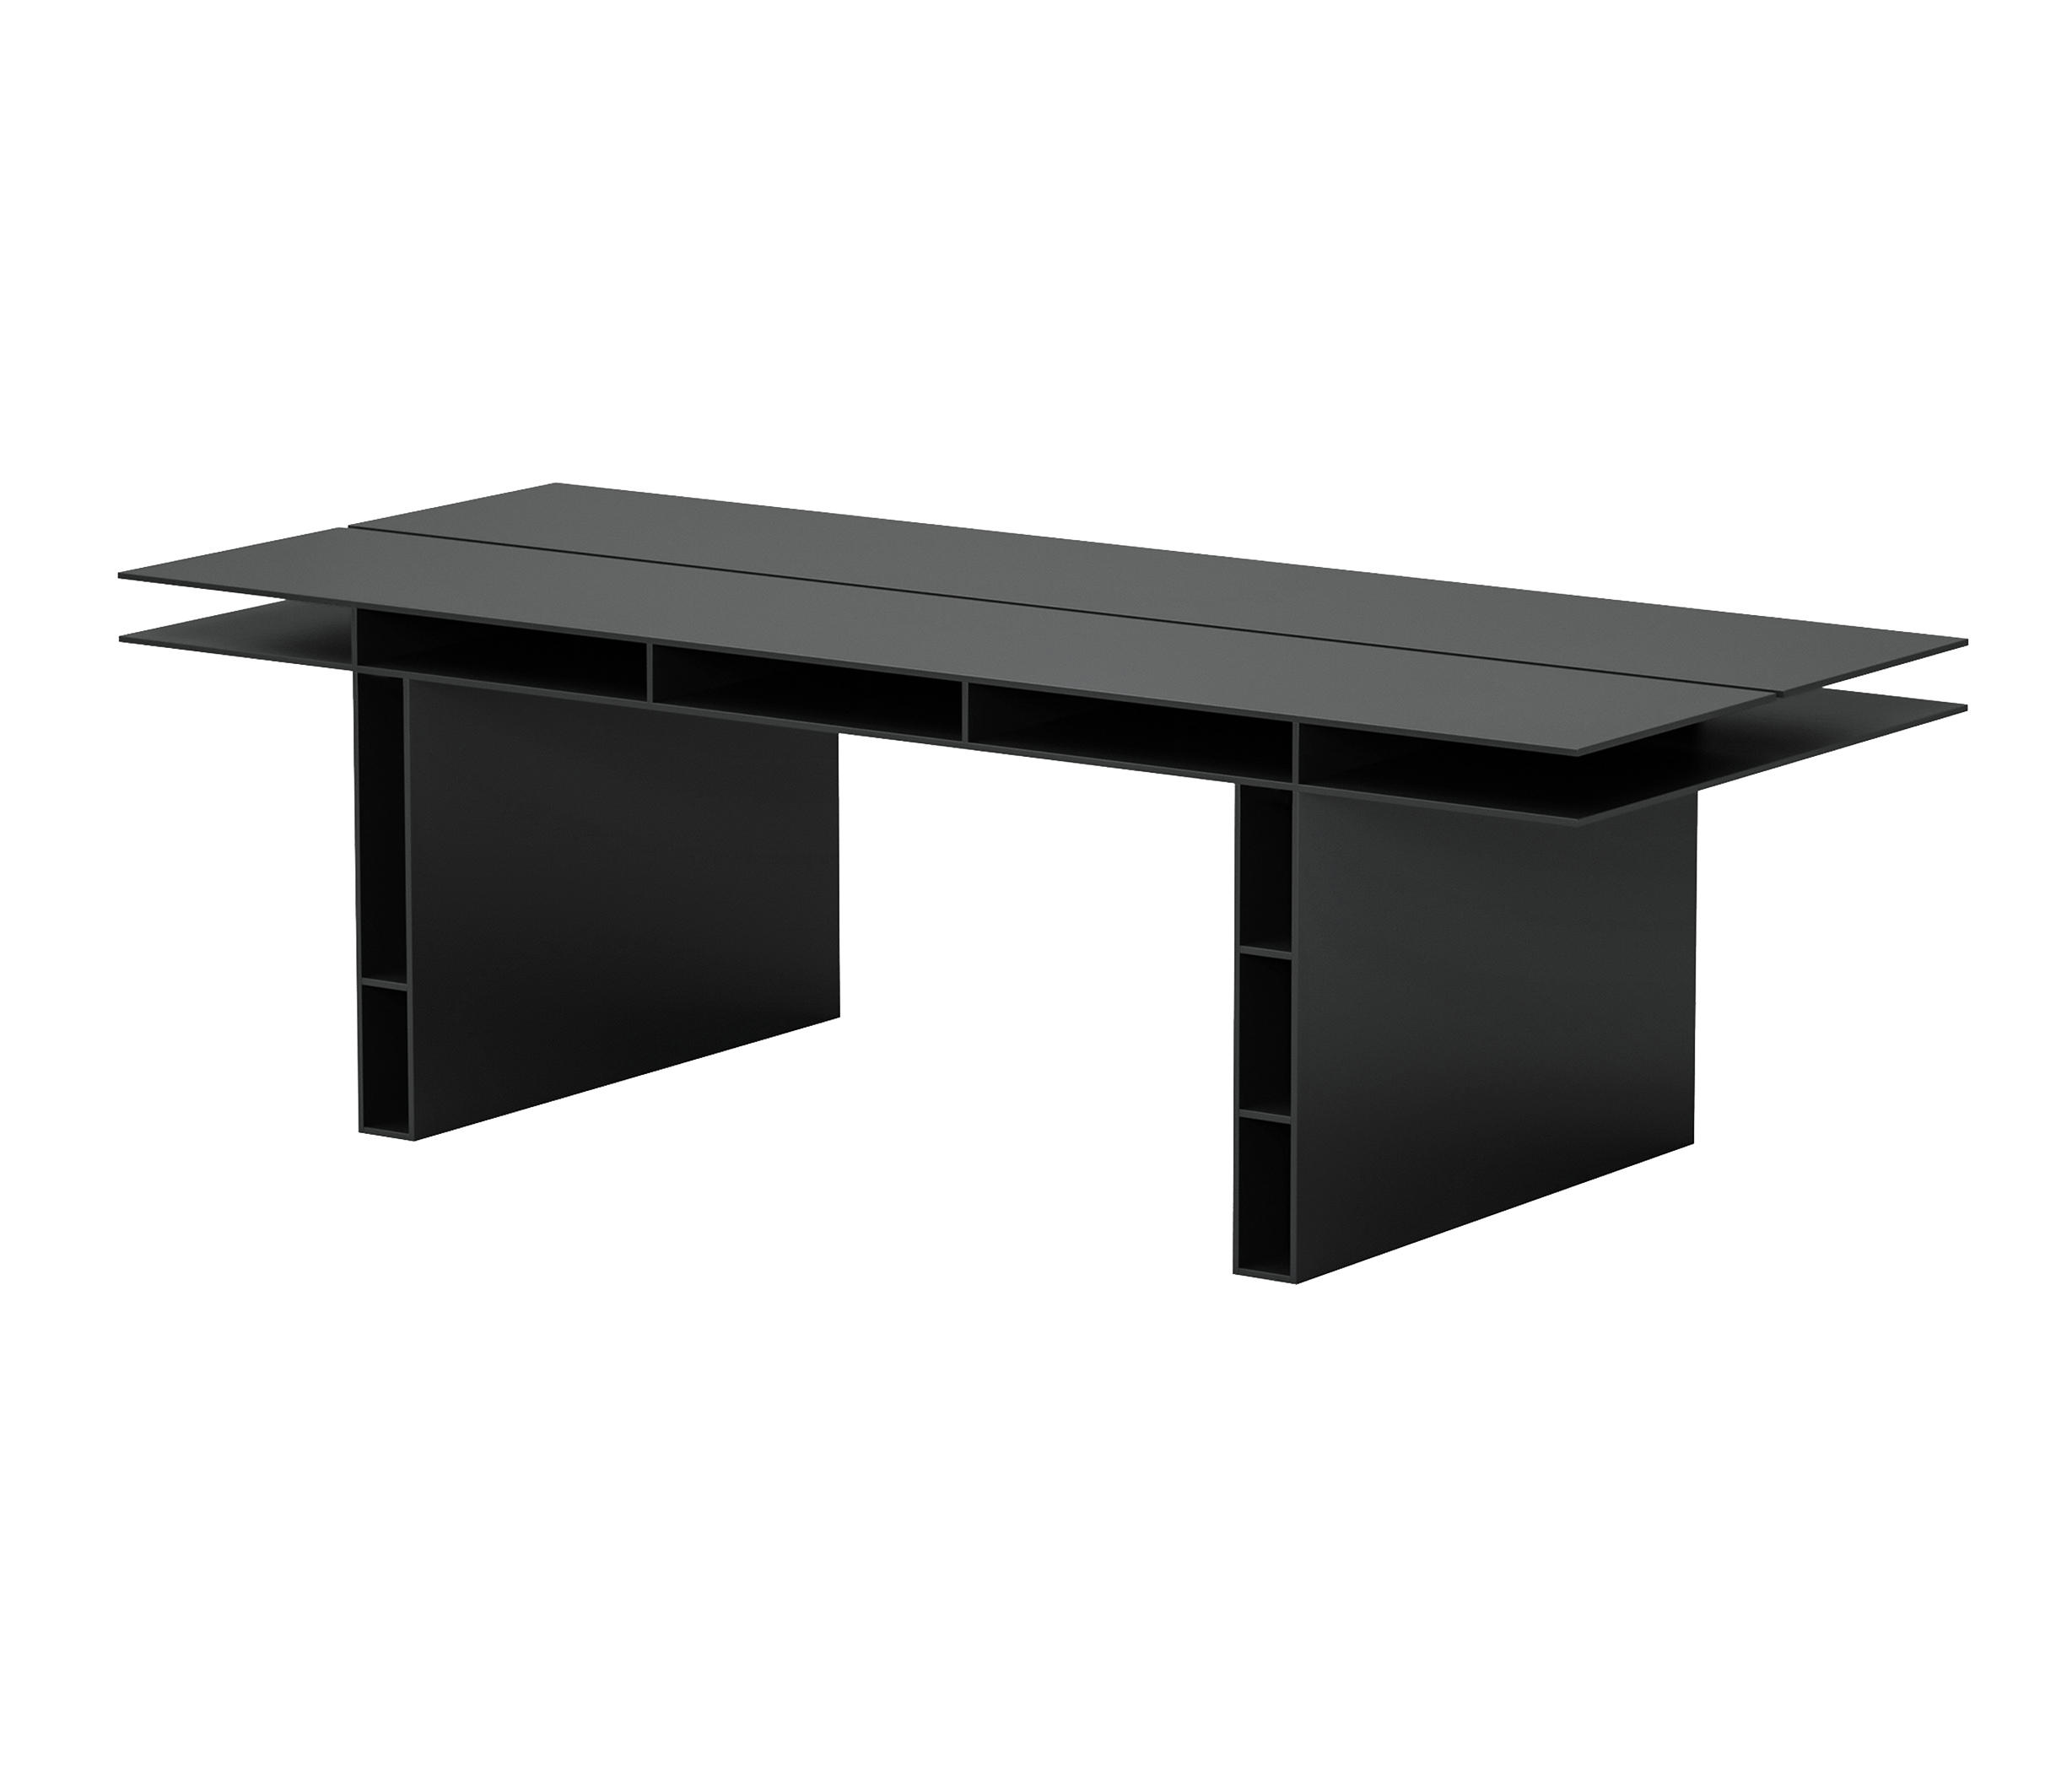 Donald Corporate Table Designer Furniture Architonic